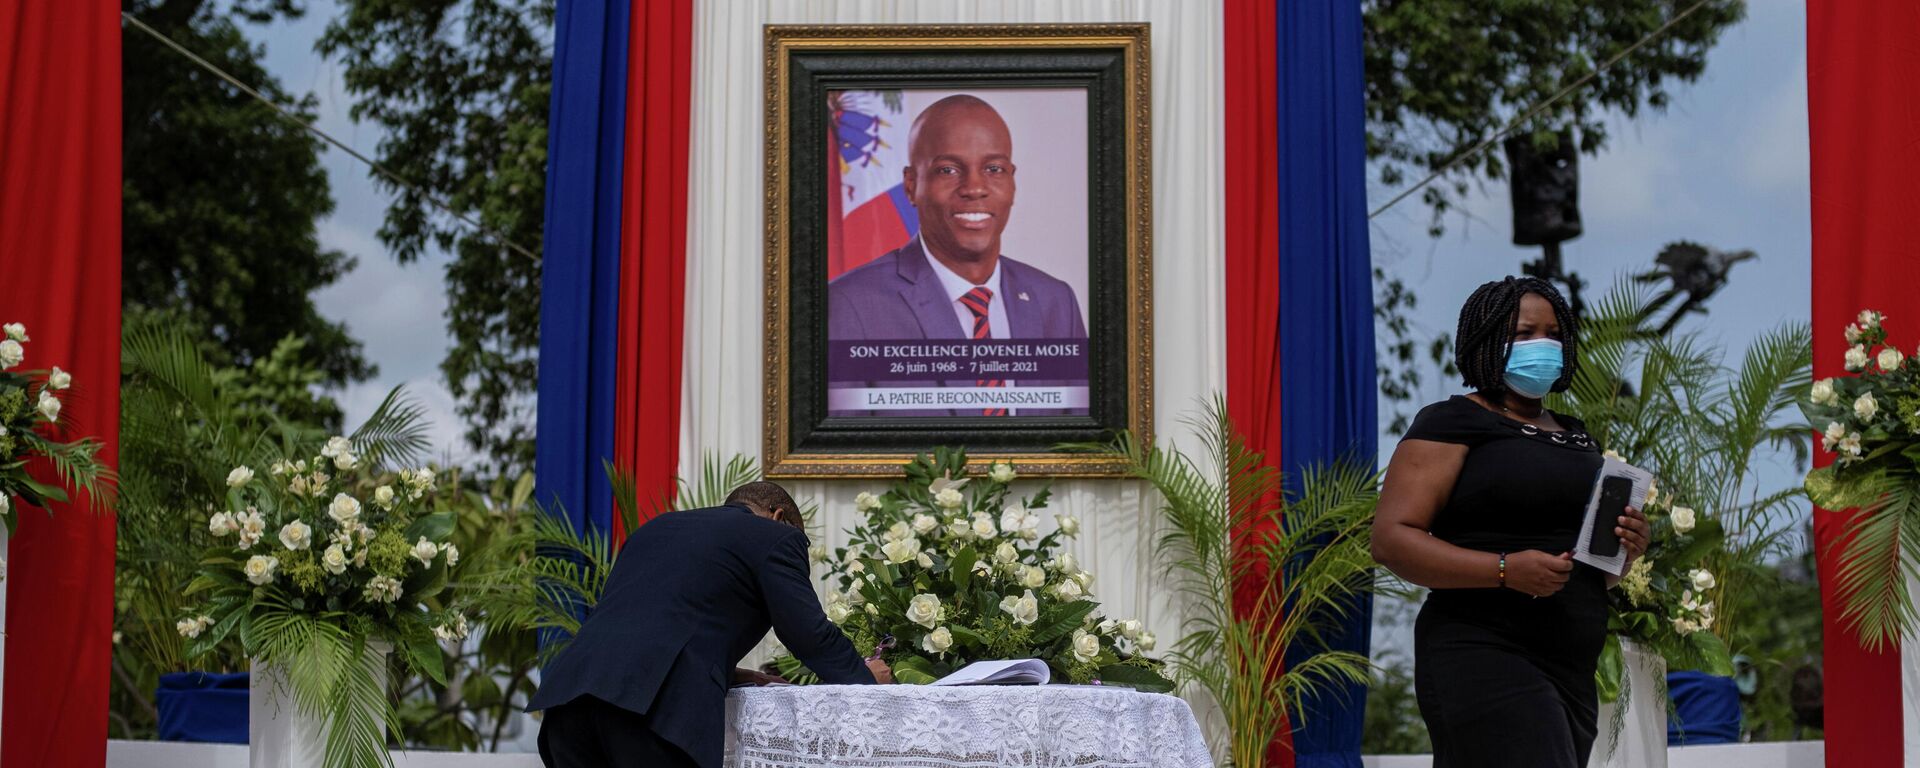 Ceremonioa en honor al expresidente de Haití, Jovenel Moise - Sputnik Mundo, 1920, 10.08.2021